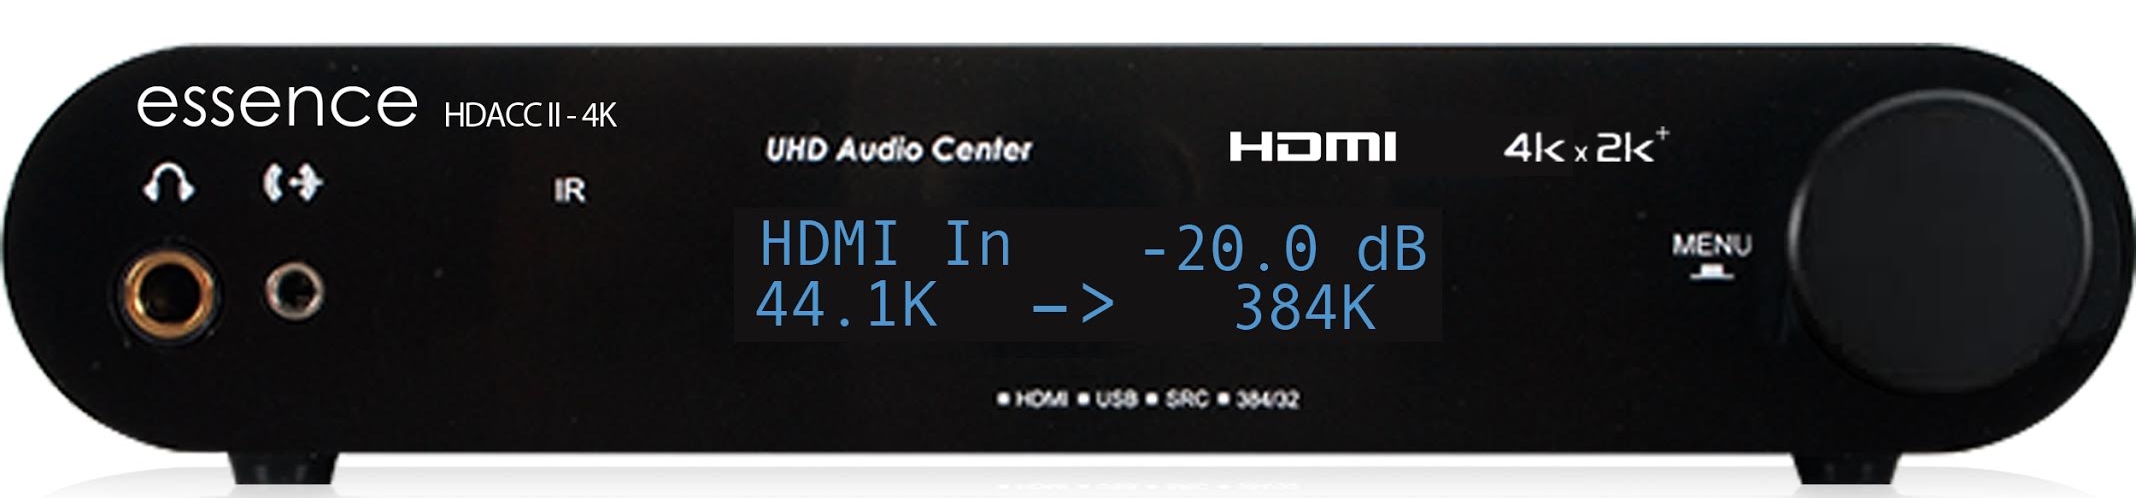 Essence HDACC II-4K HDMI DAC Preamp Headphone Amp Essence For High  Res Audio